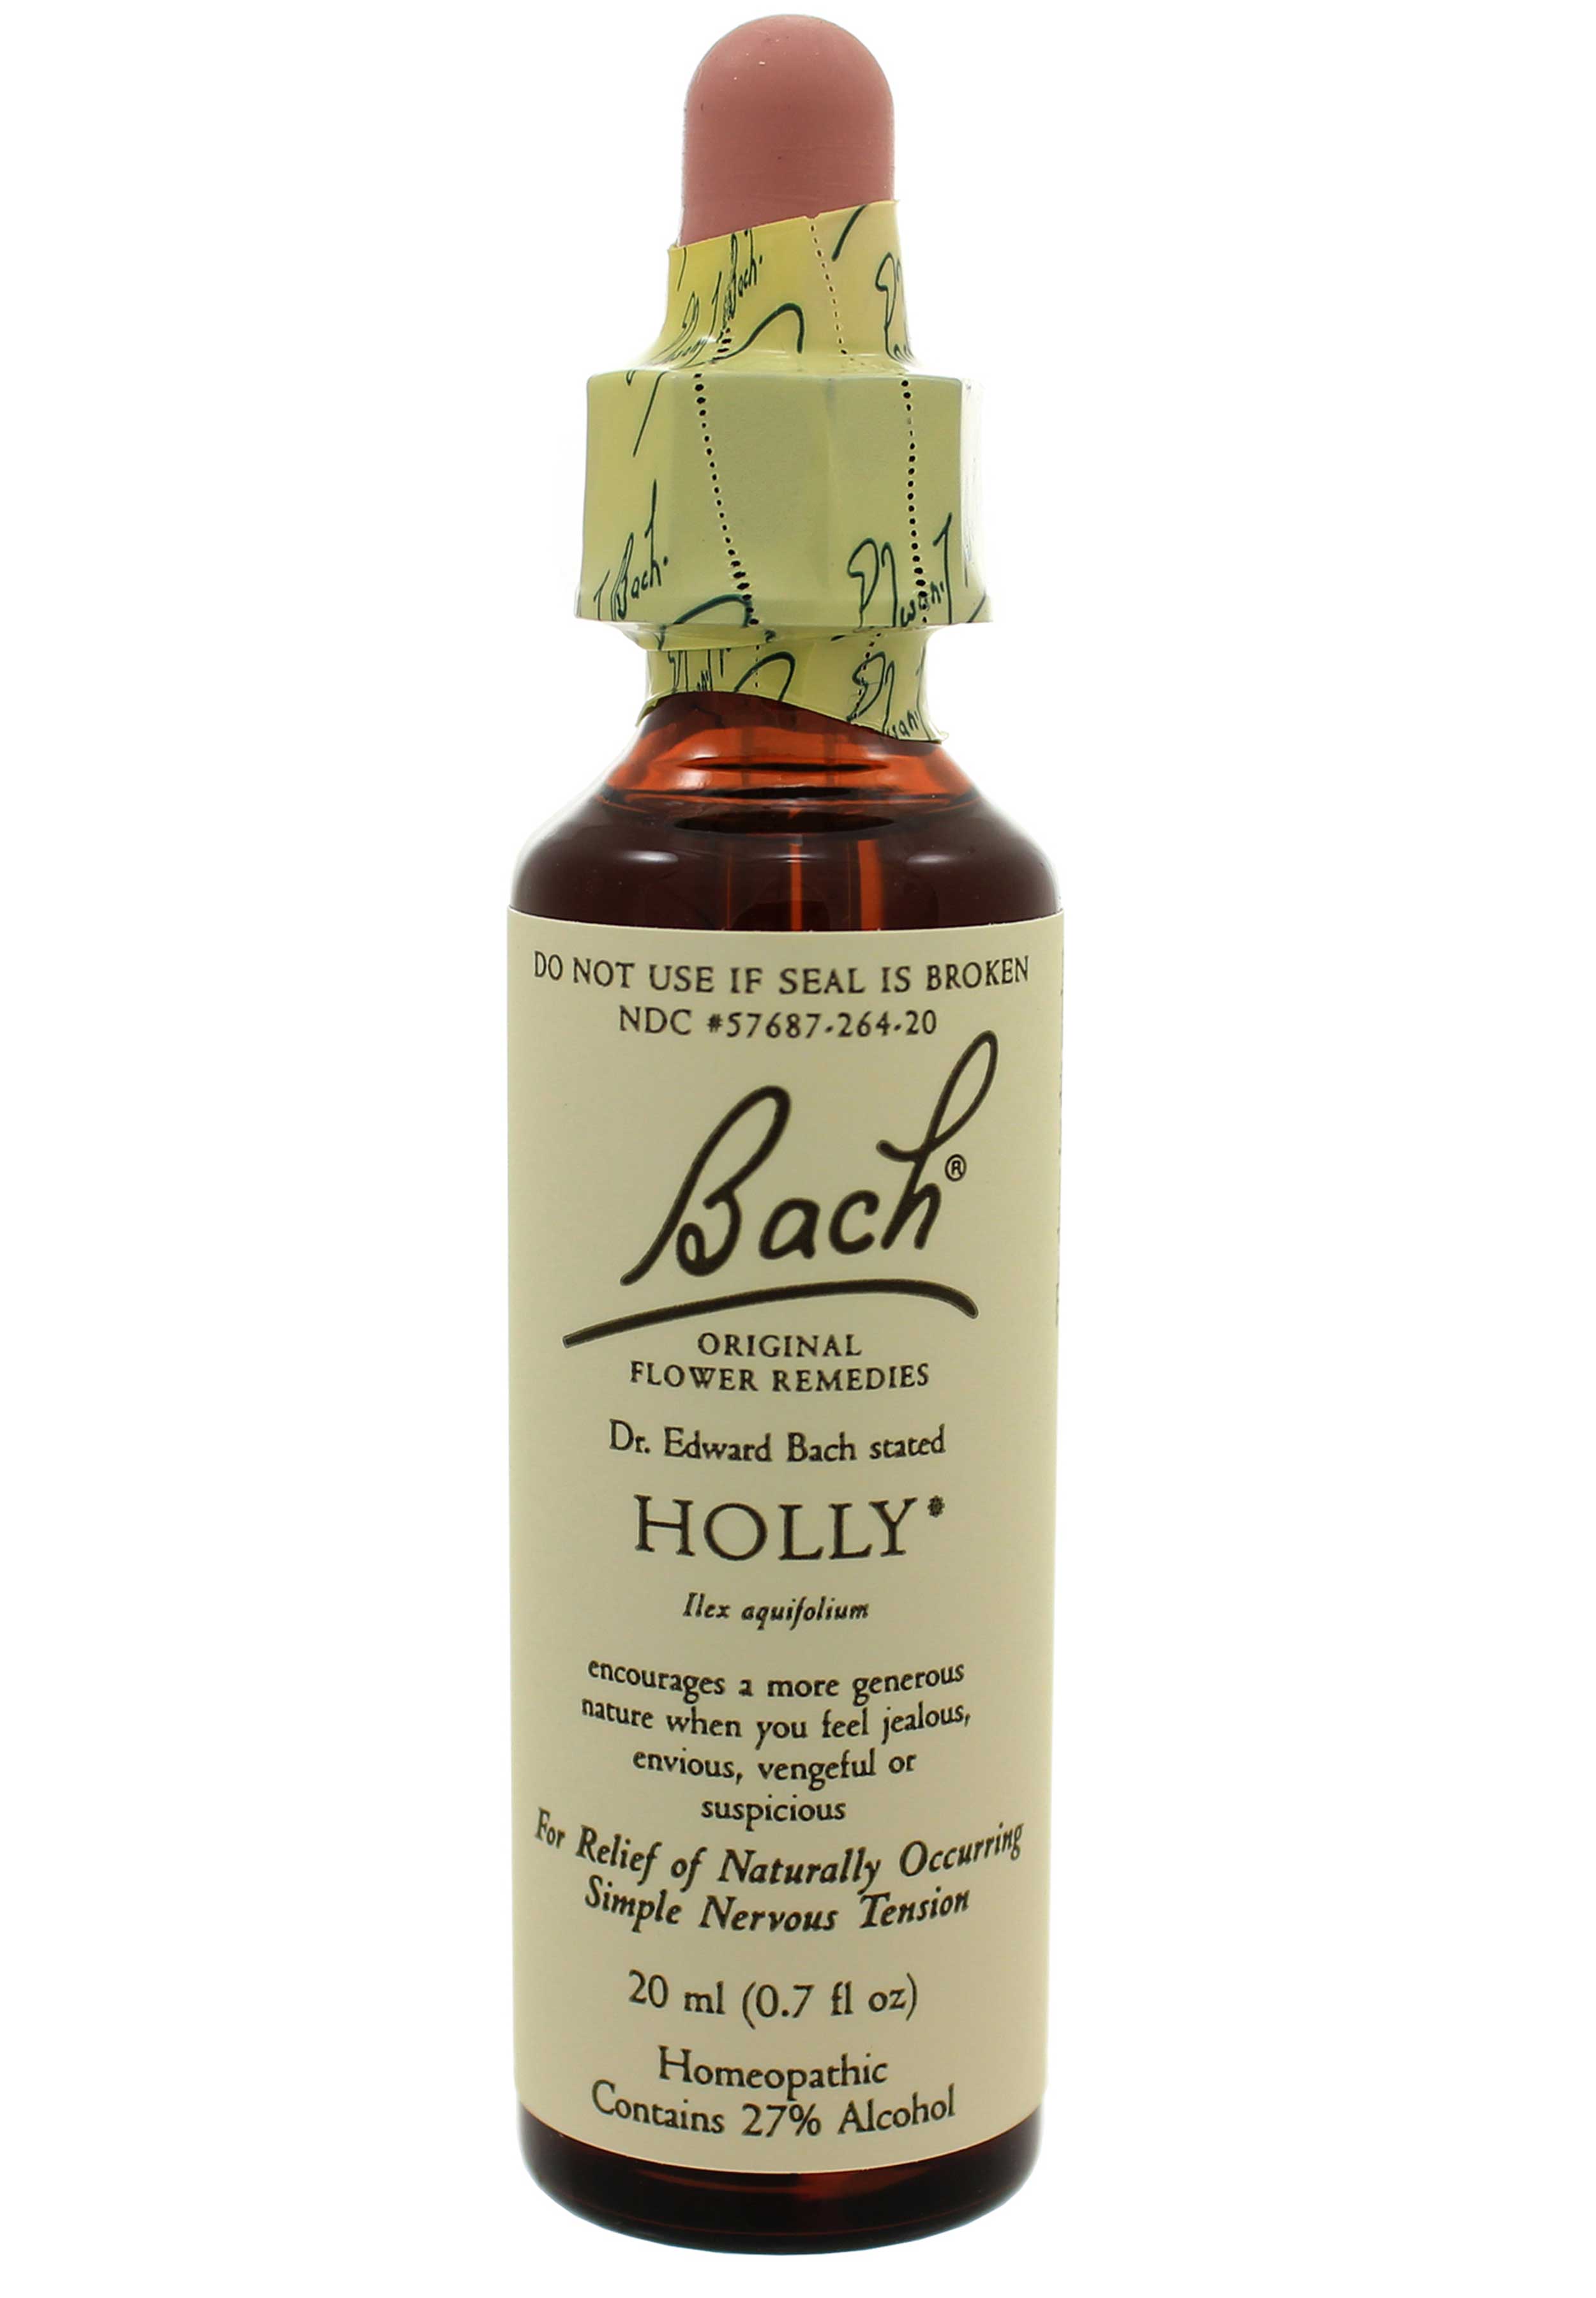 Bach Flower Remedies Holly